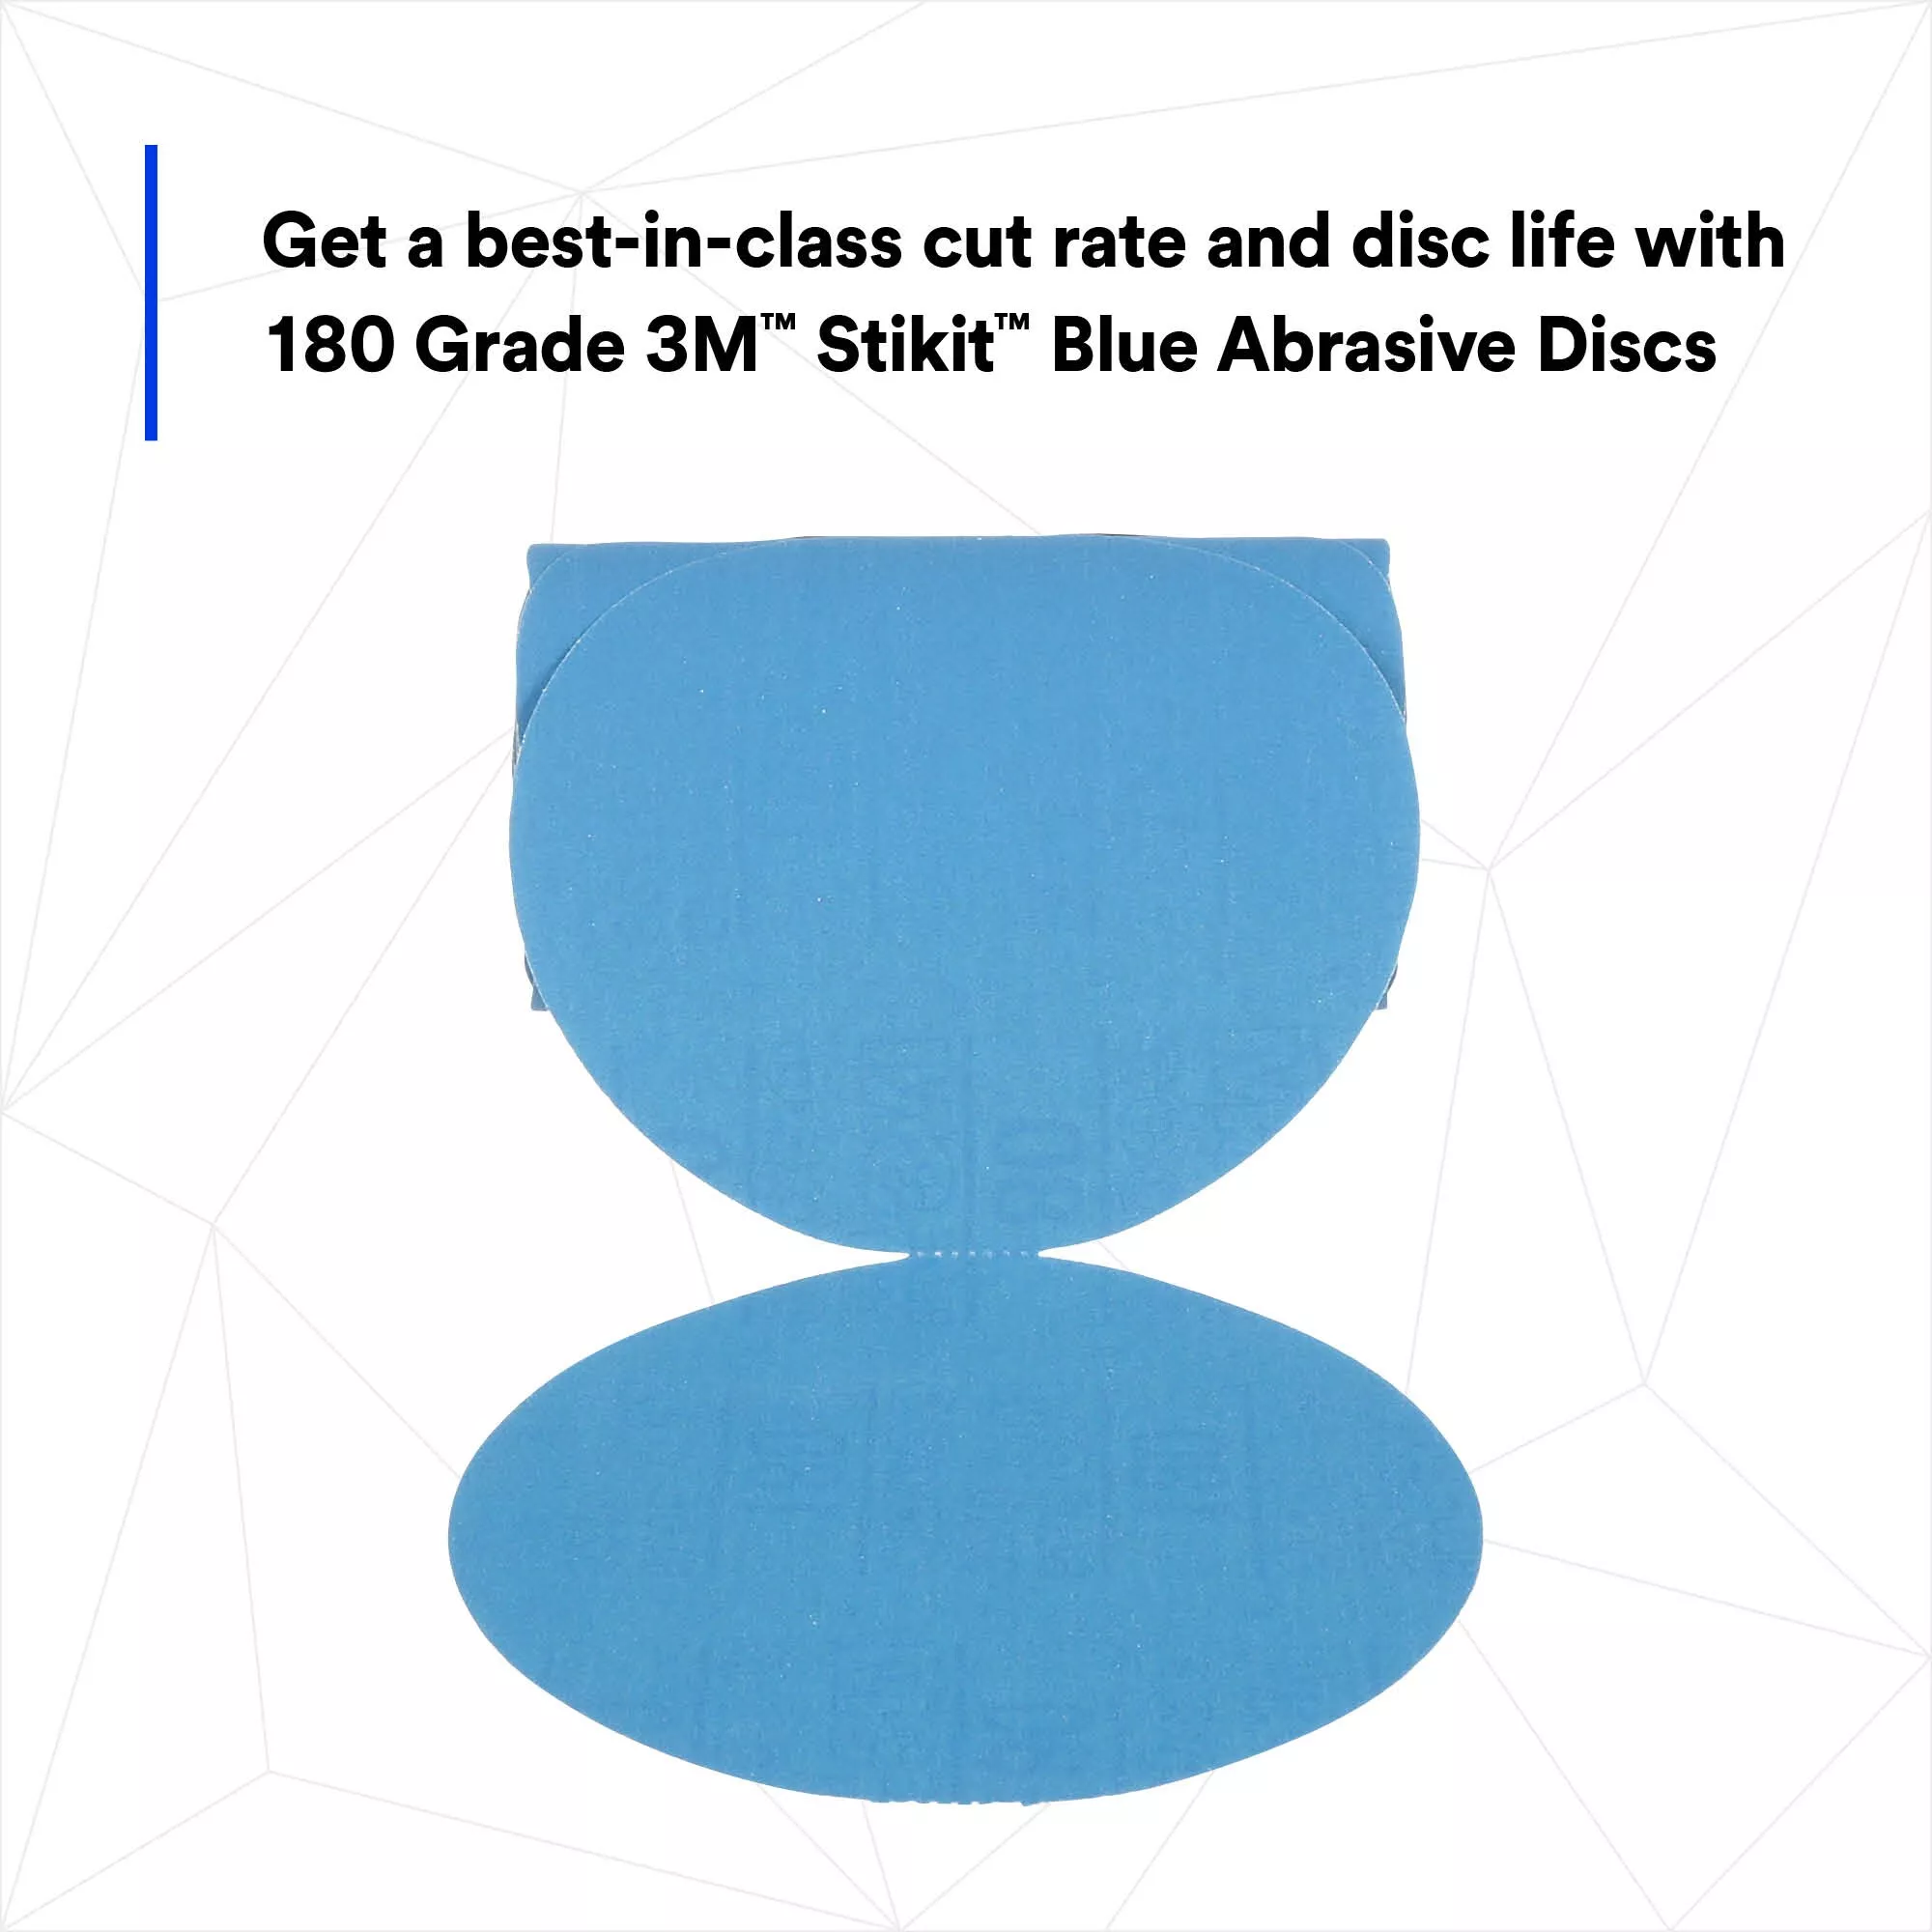 SKU 7100098234 | 3M™ Stikit™ Blue Abrasive Disc Roll